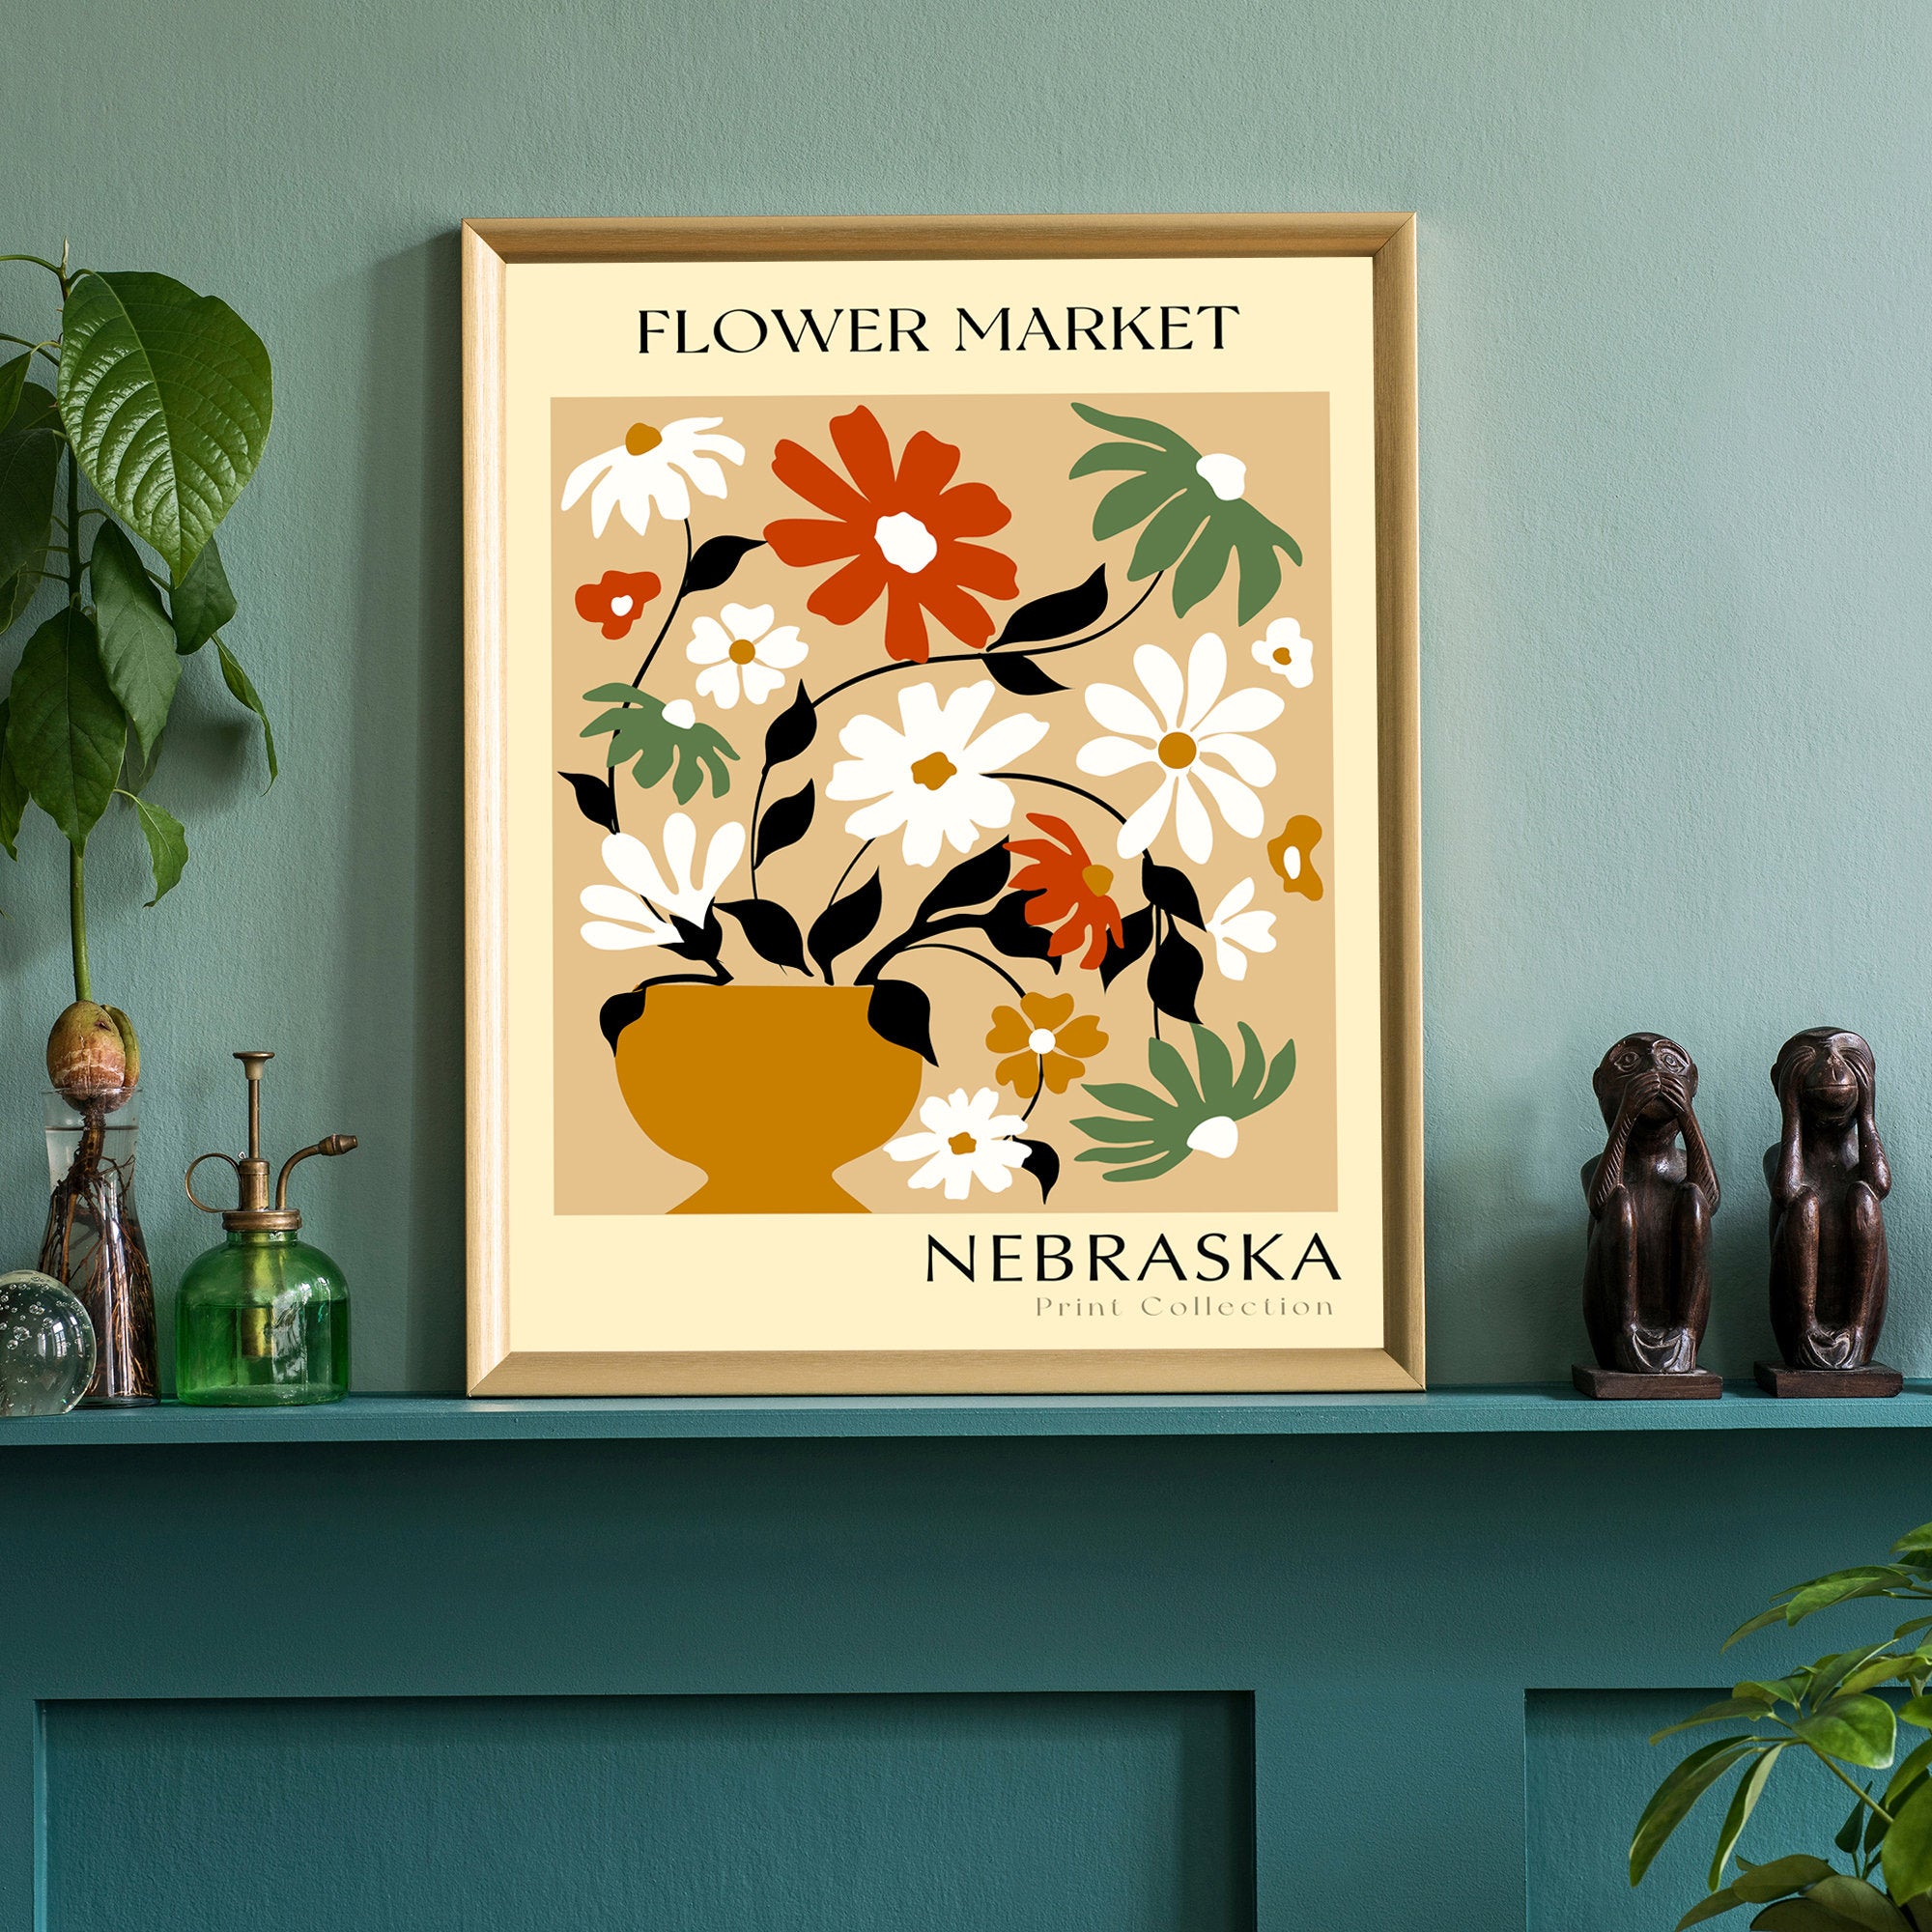 Nebraska State flower print, USA states poster, Nebraska flower market poster, Botanical poster, Nature poster artwork, Boho floral wall art